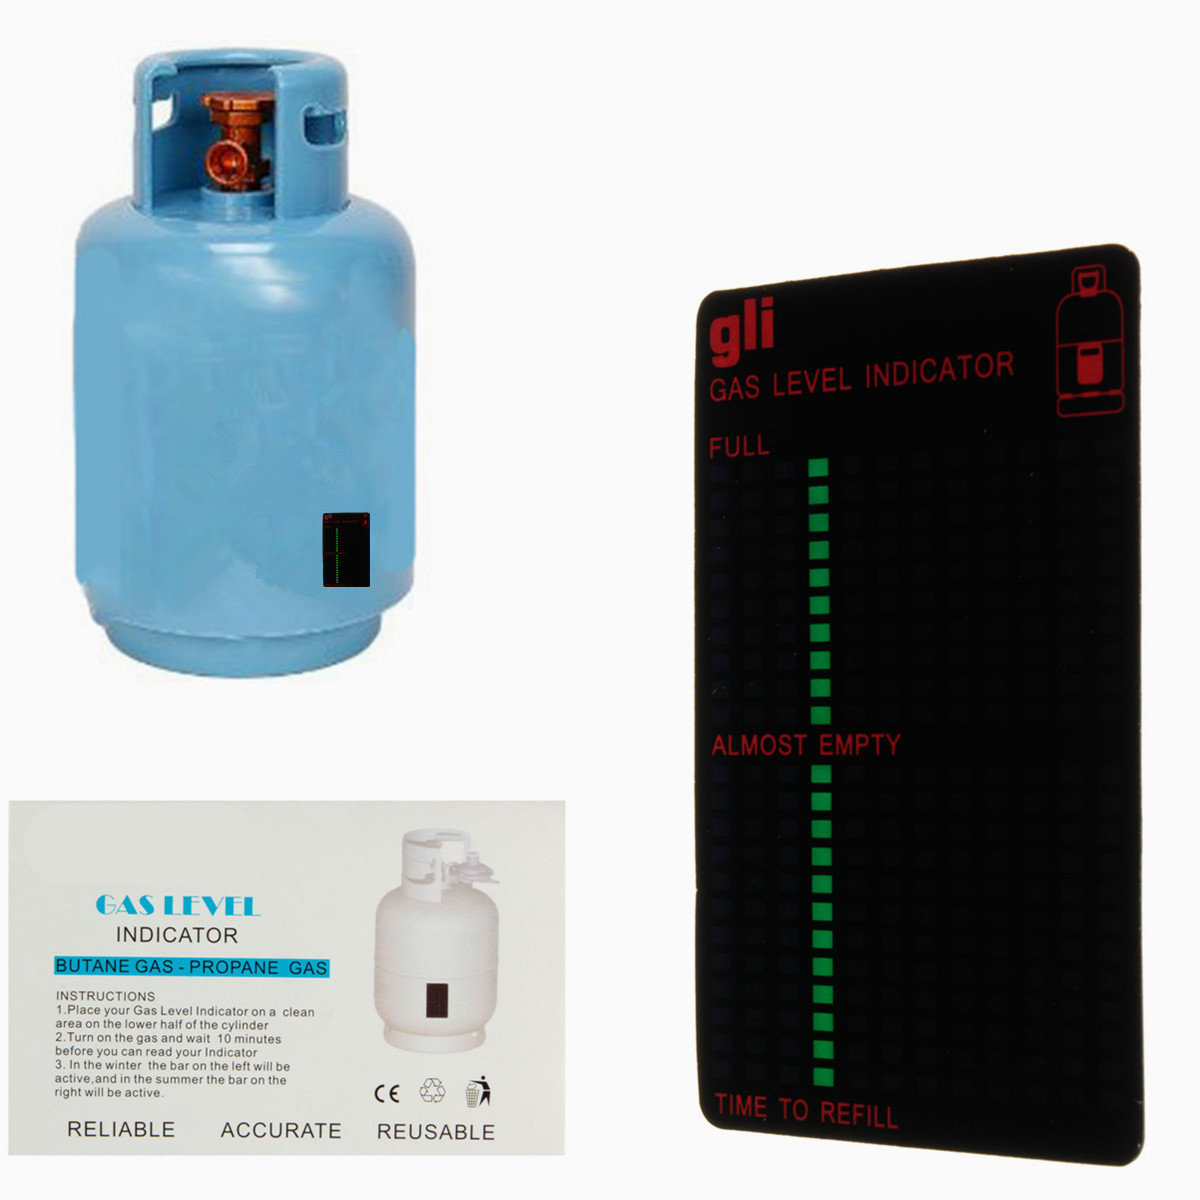 Find Propane Butane LPG Fuel Gas Tank Level Indicator Magnetic Gauge Caravan Bottle for Sale on Gipsybee.com with cryptocurrencies